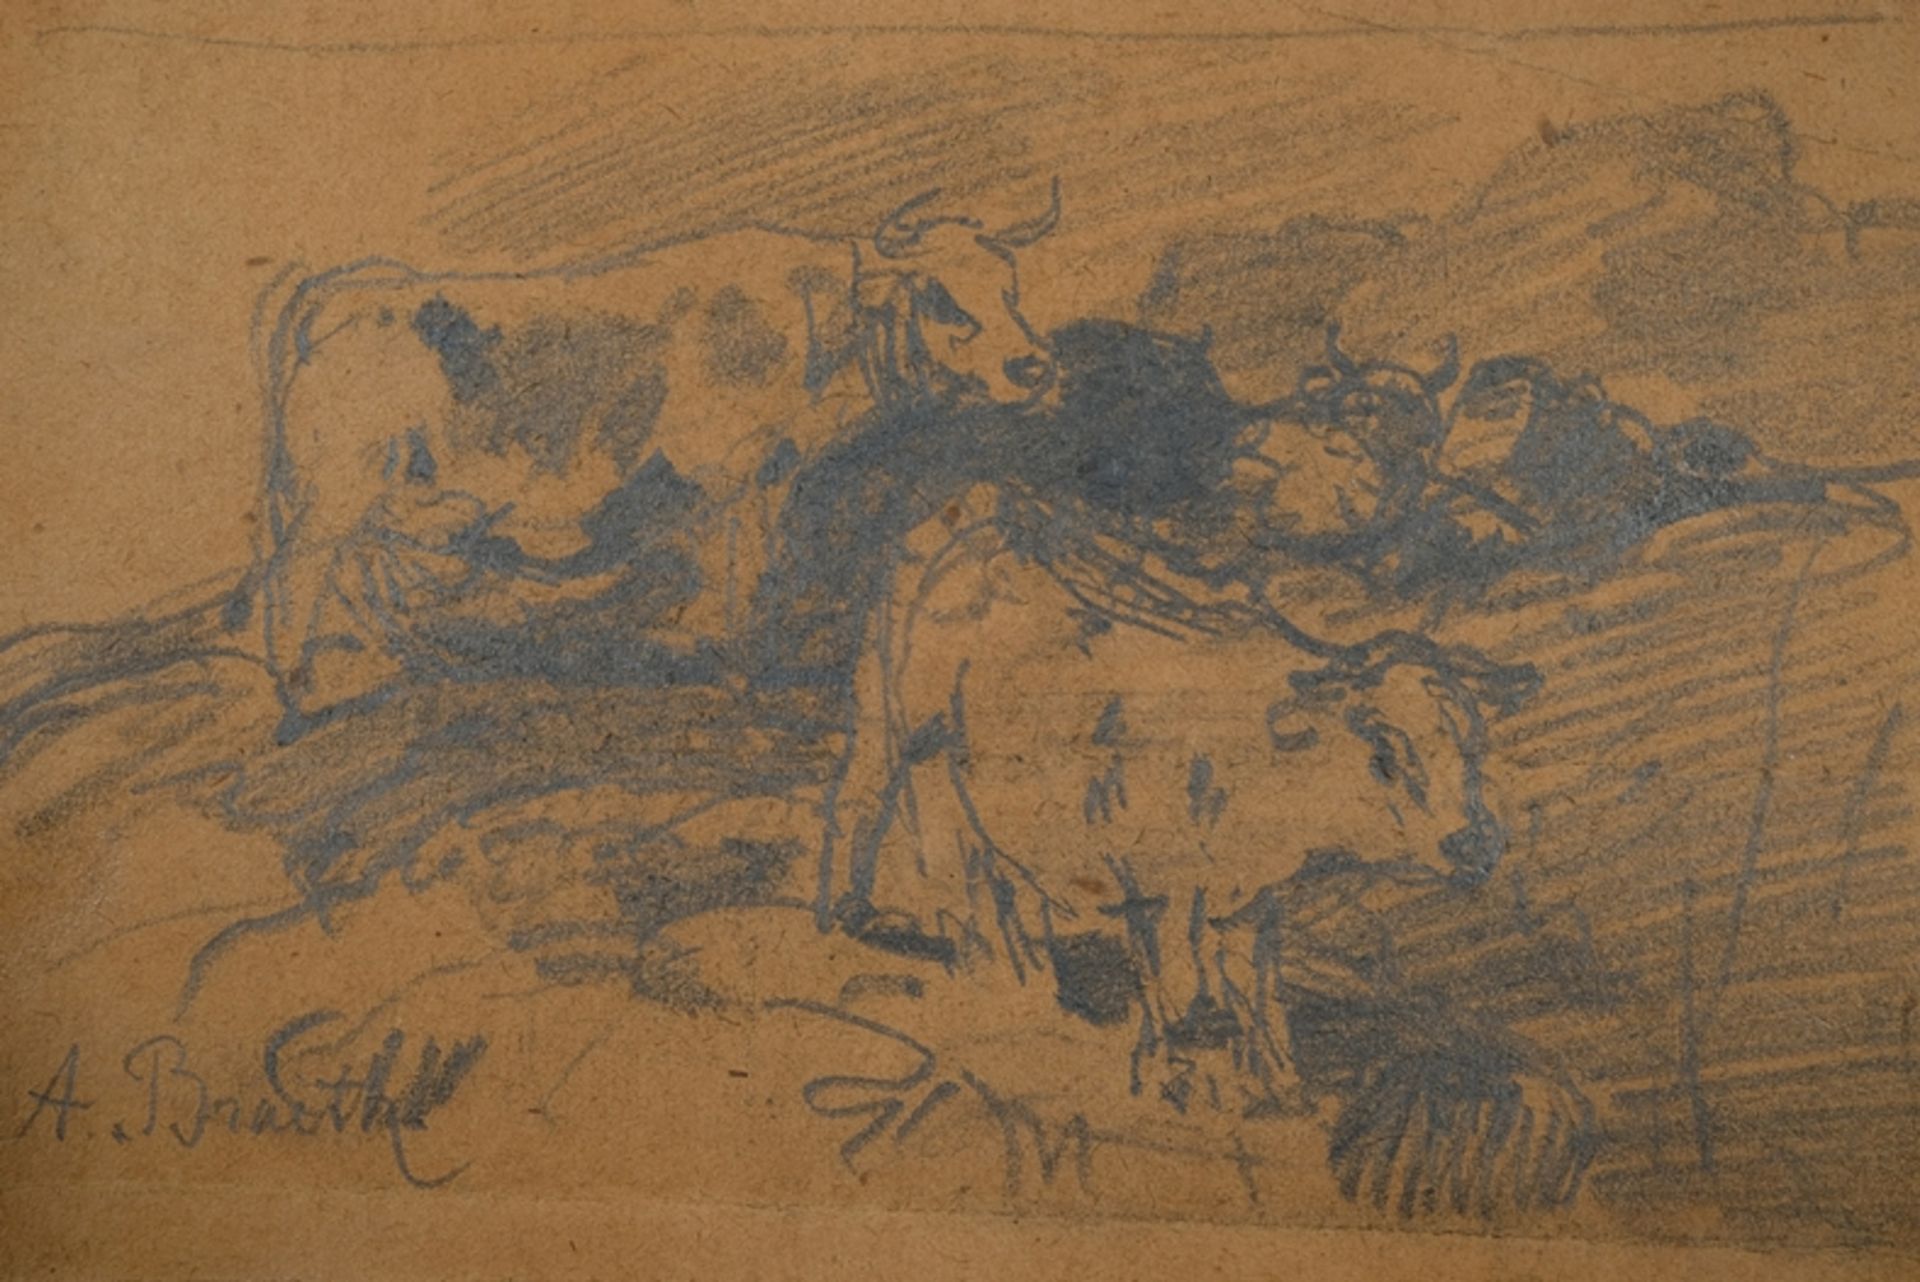 Braith, Anton (1836-1905) Cattle in Landscape, undated, pencil on paper. 